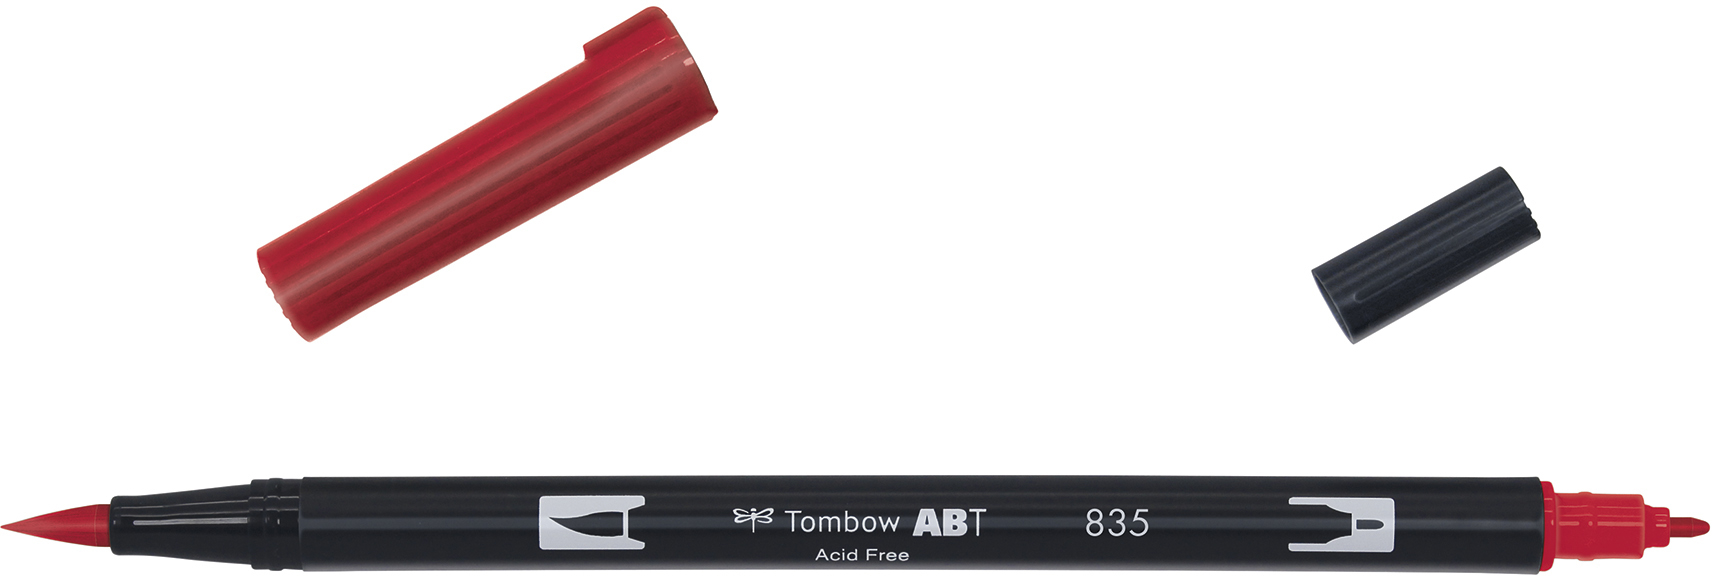 TOMBOW Dual Brush Pen ABT 835 persimmon